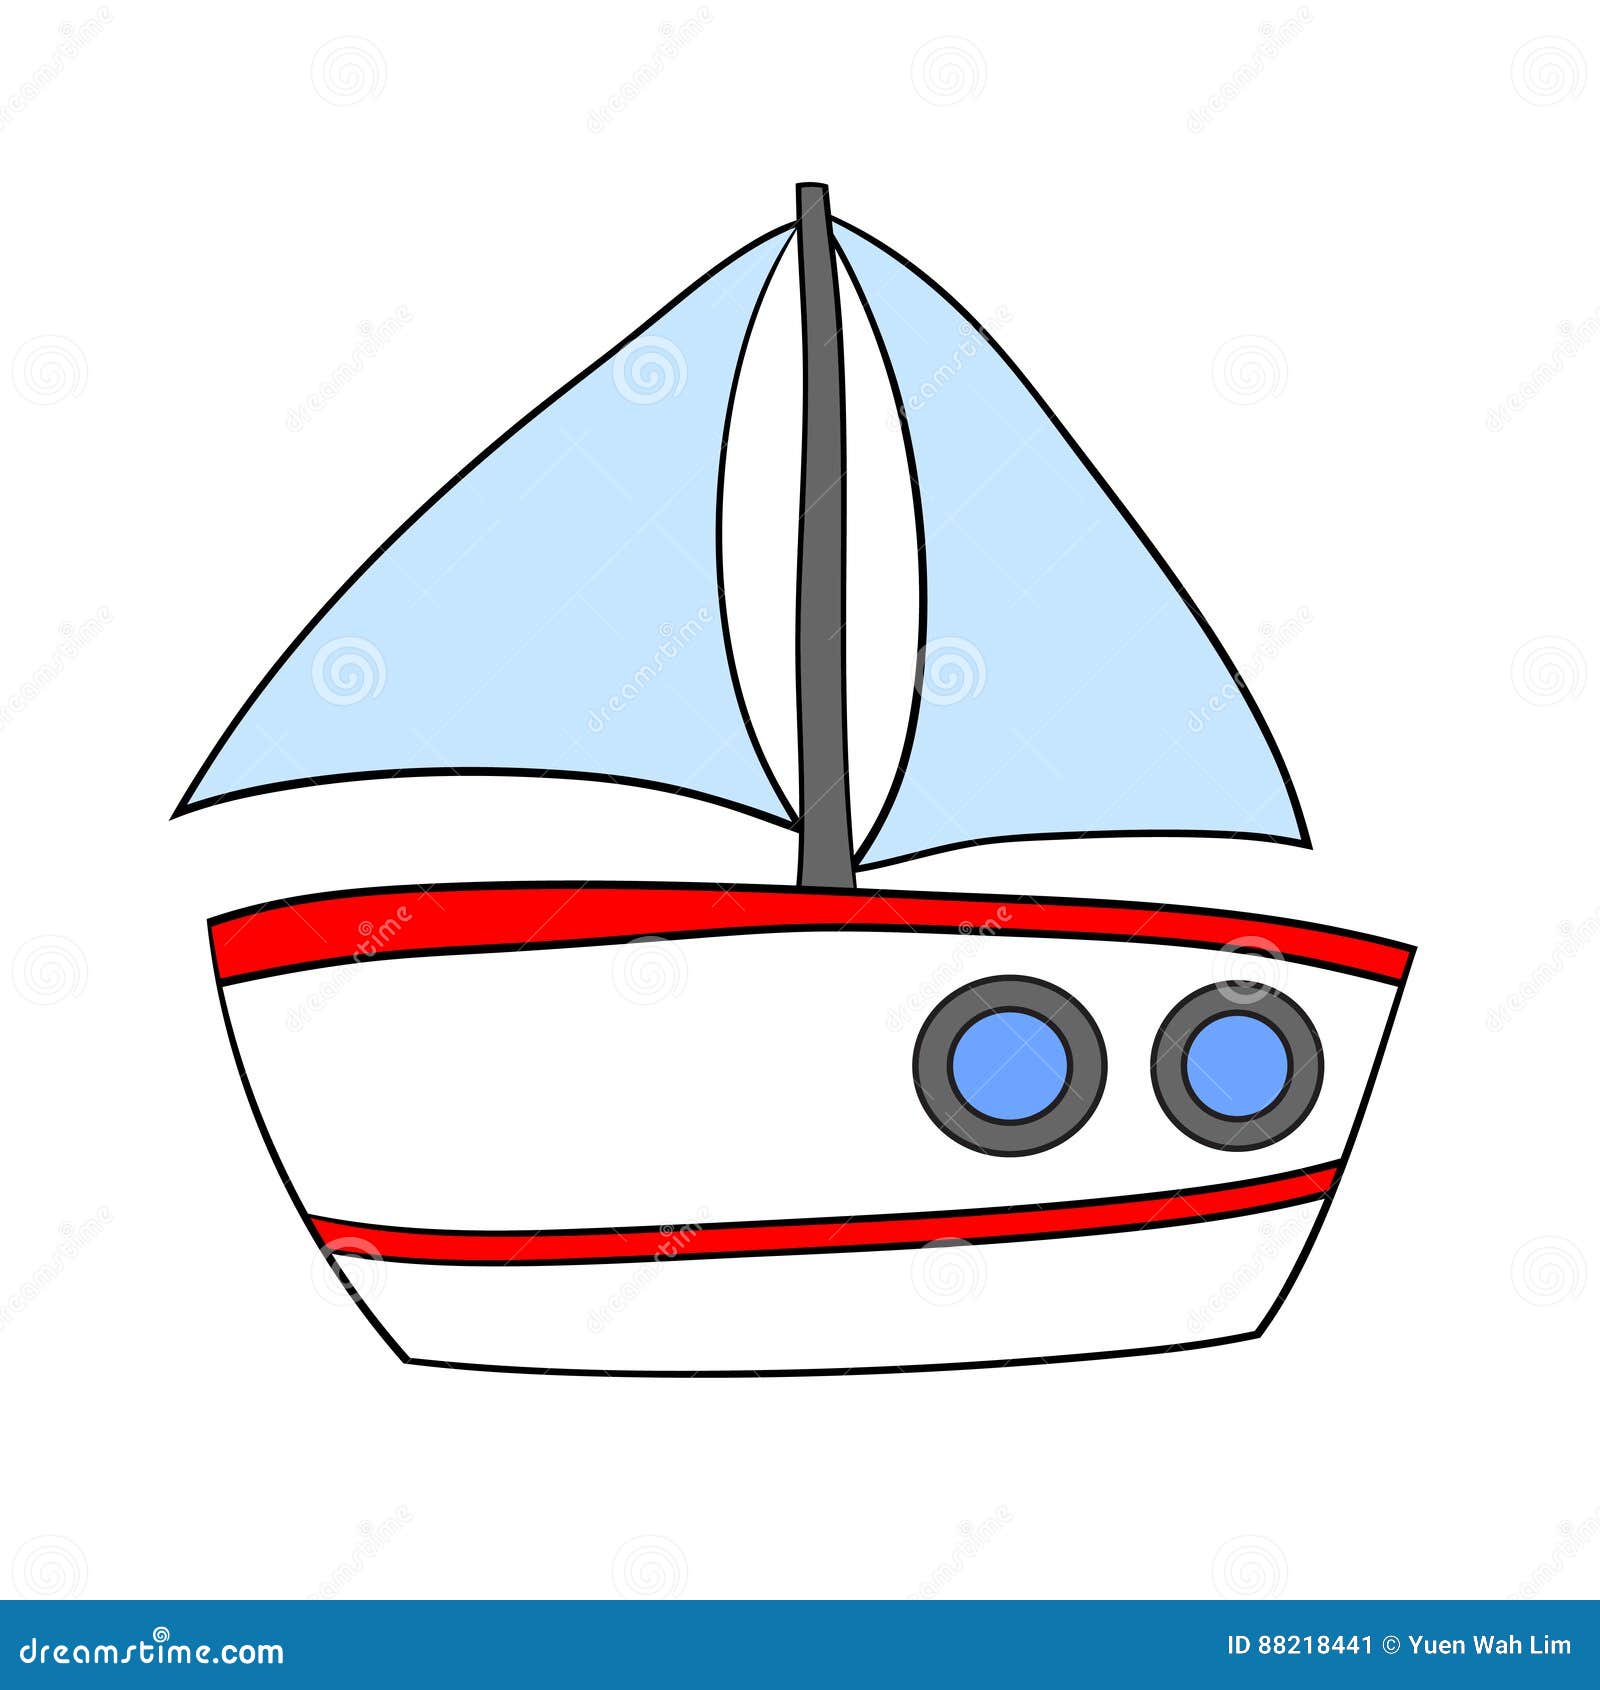 Isolated Cartoon Sail Boat stock vector. Illustration of blue - 88218441